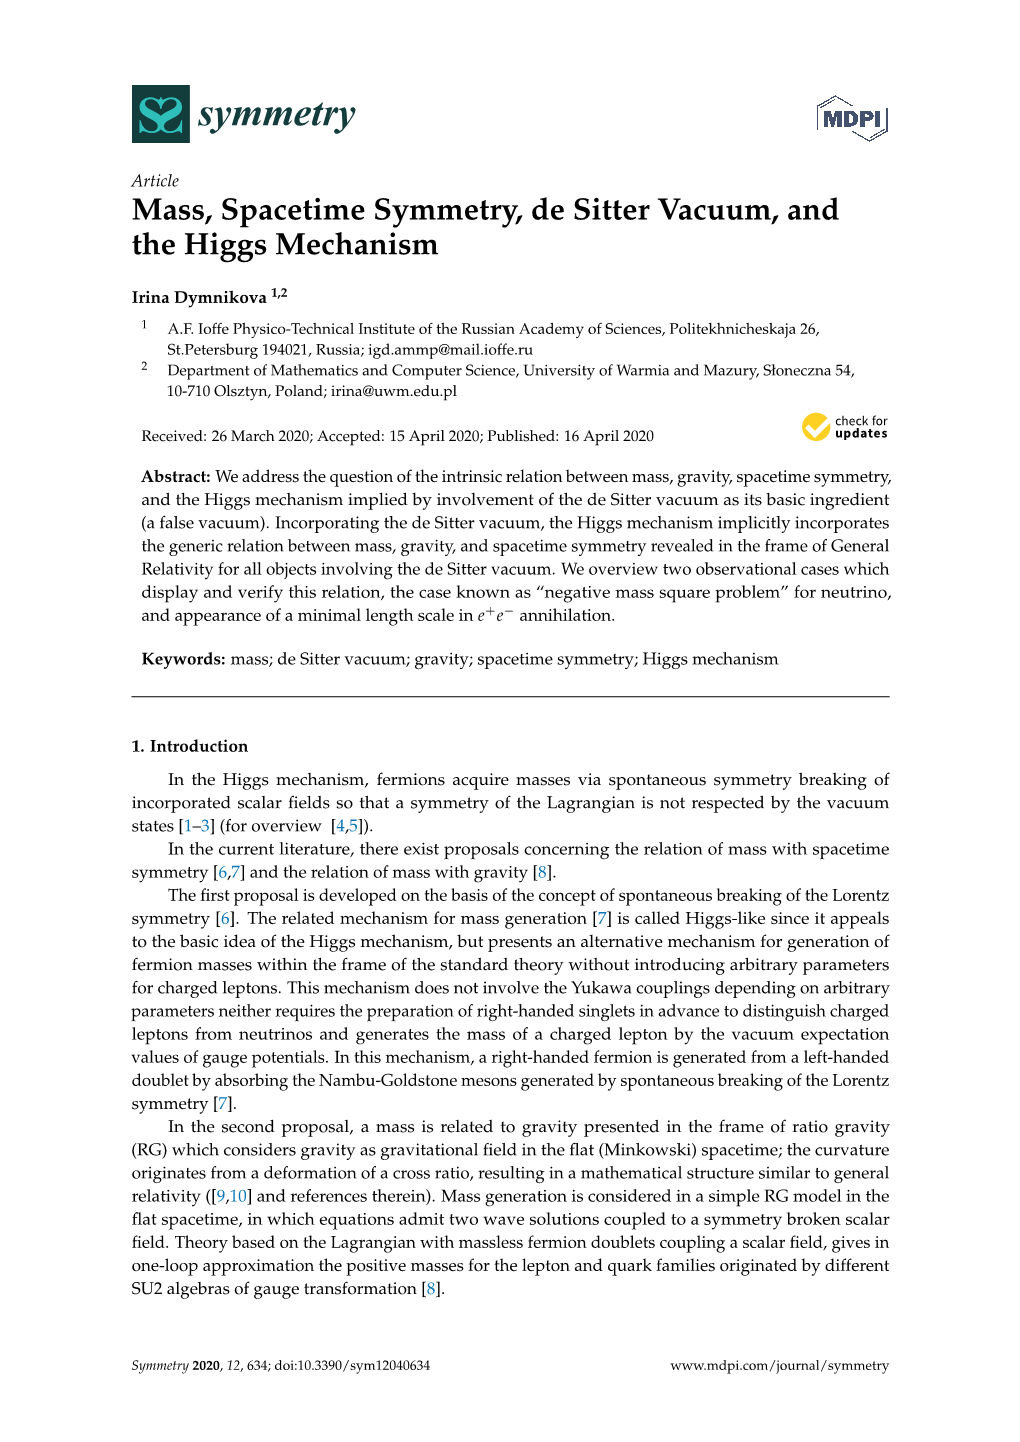 Mass, Spacetime Symmetry, De Sitter Vacuum, and the Higgs Mechanism